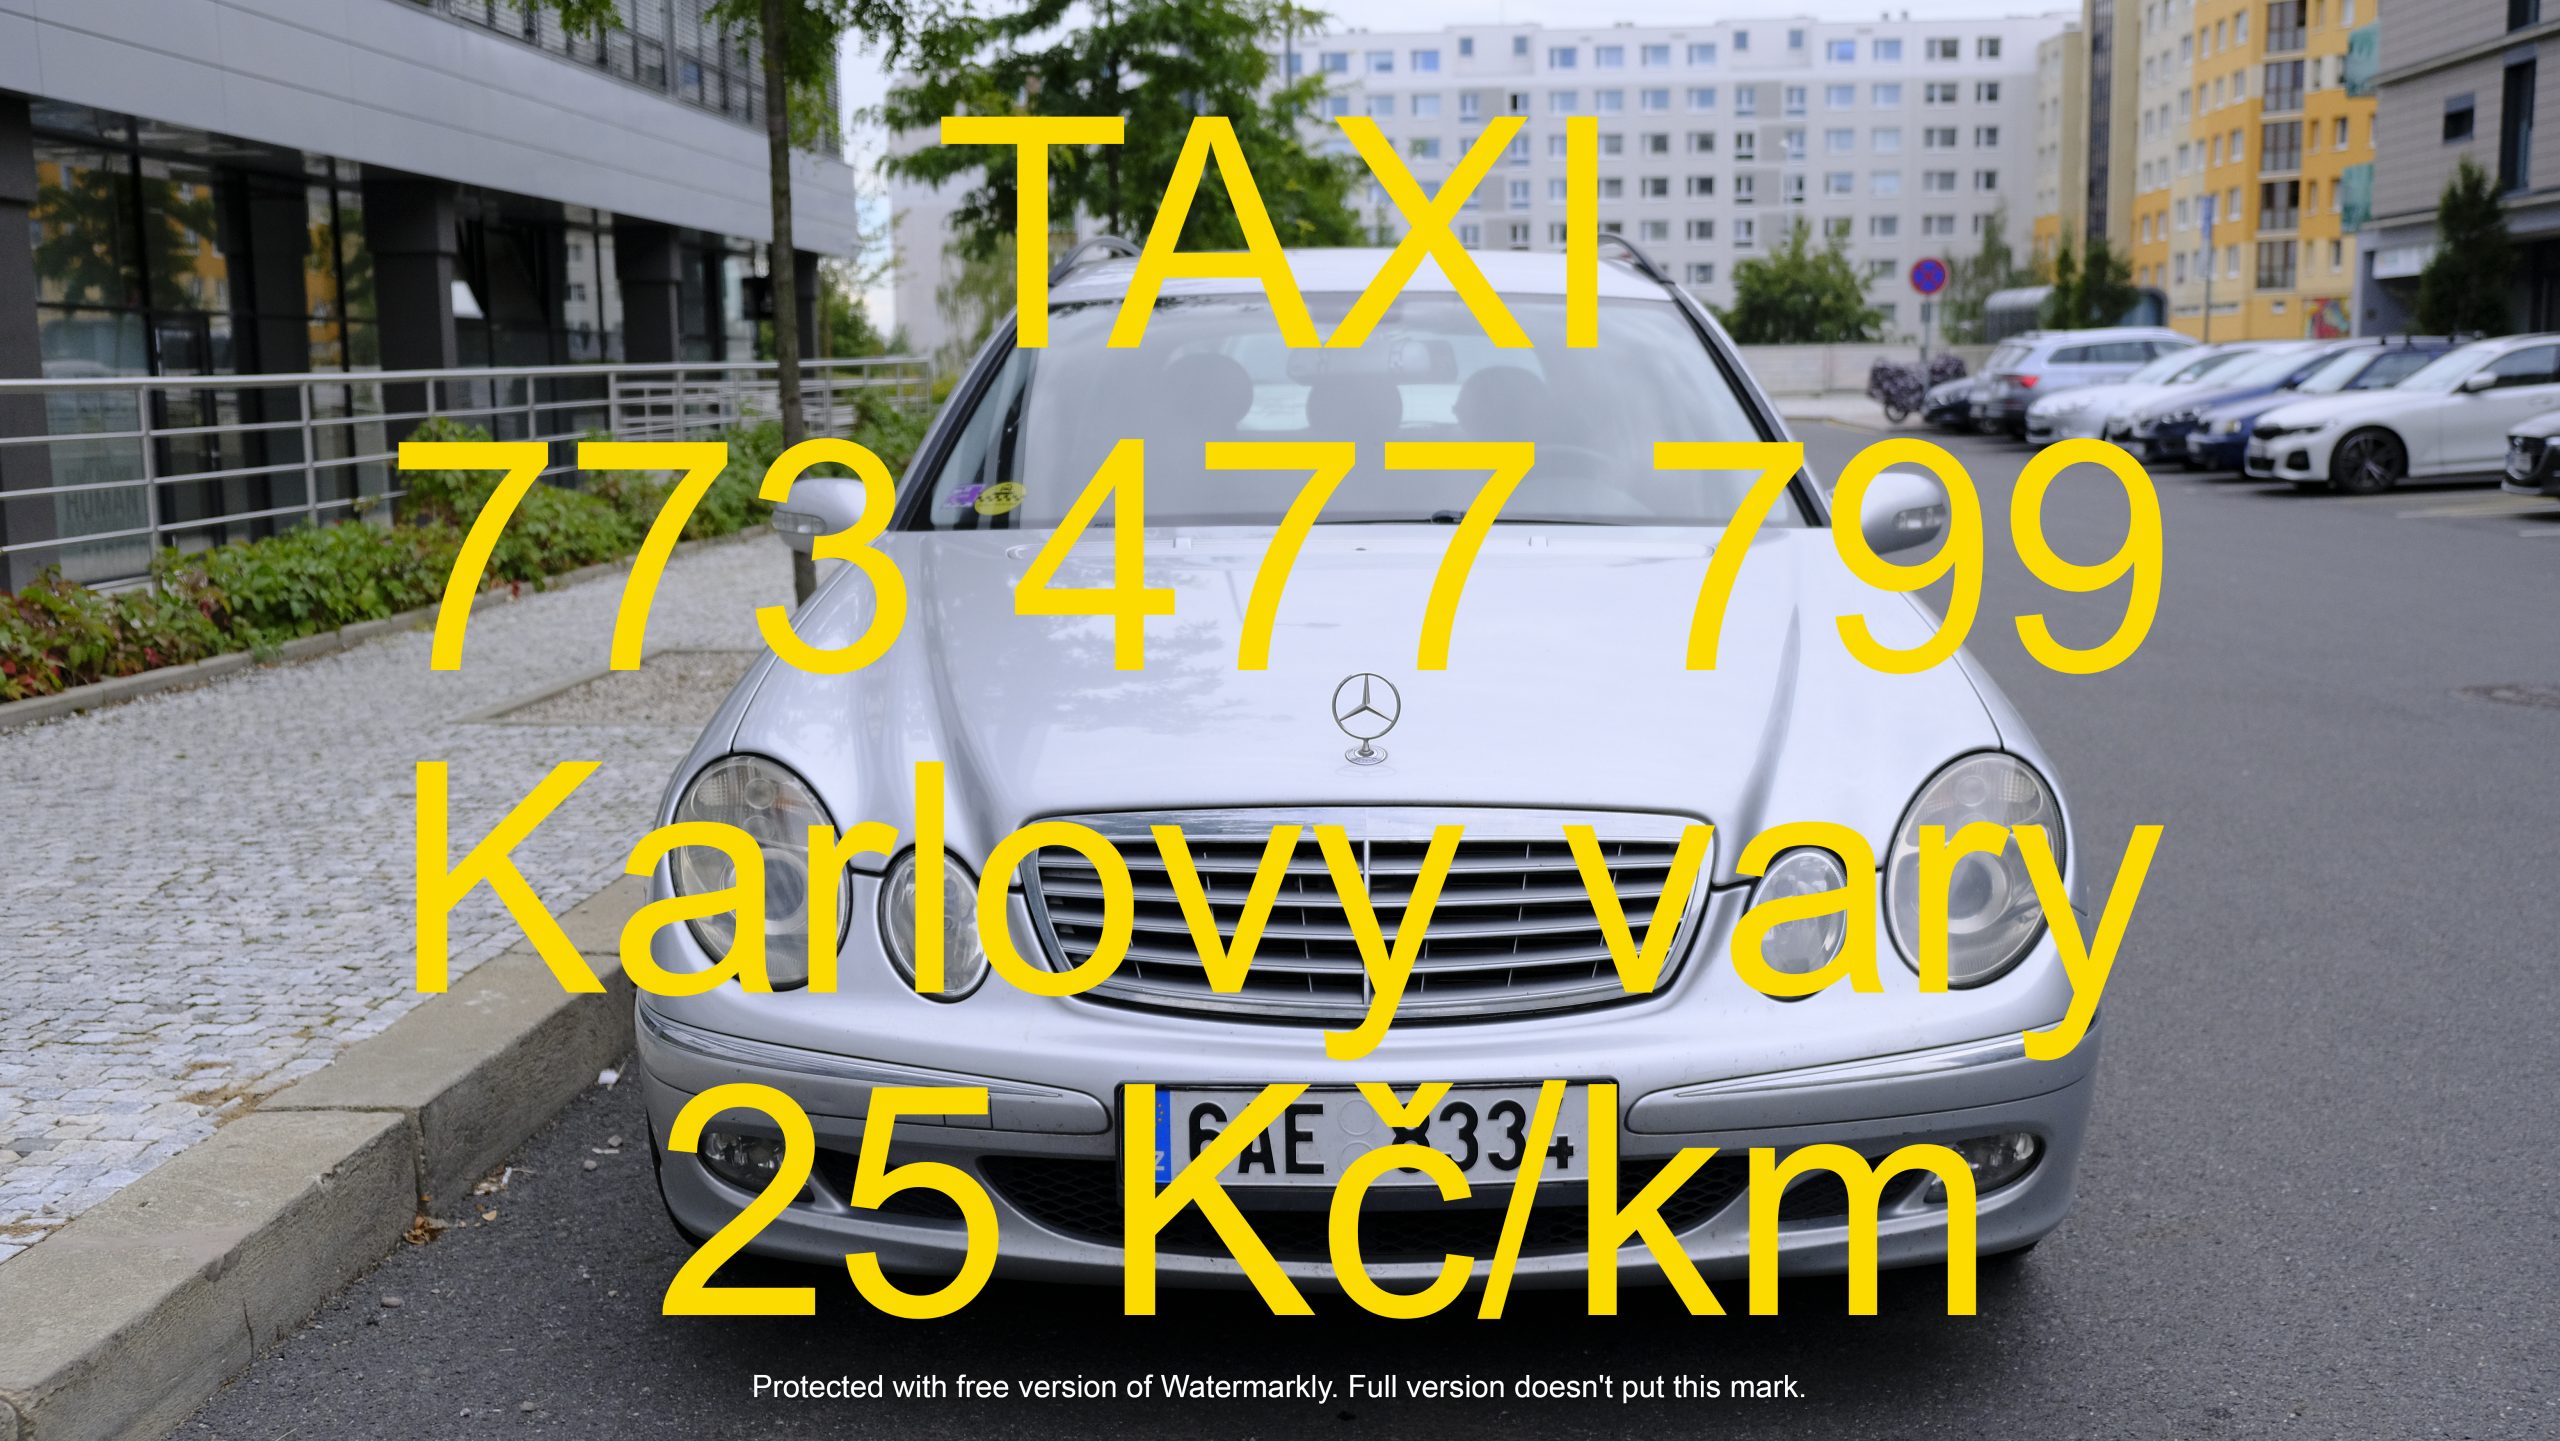 taxi karlovy vary